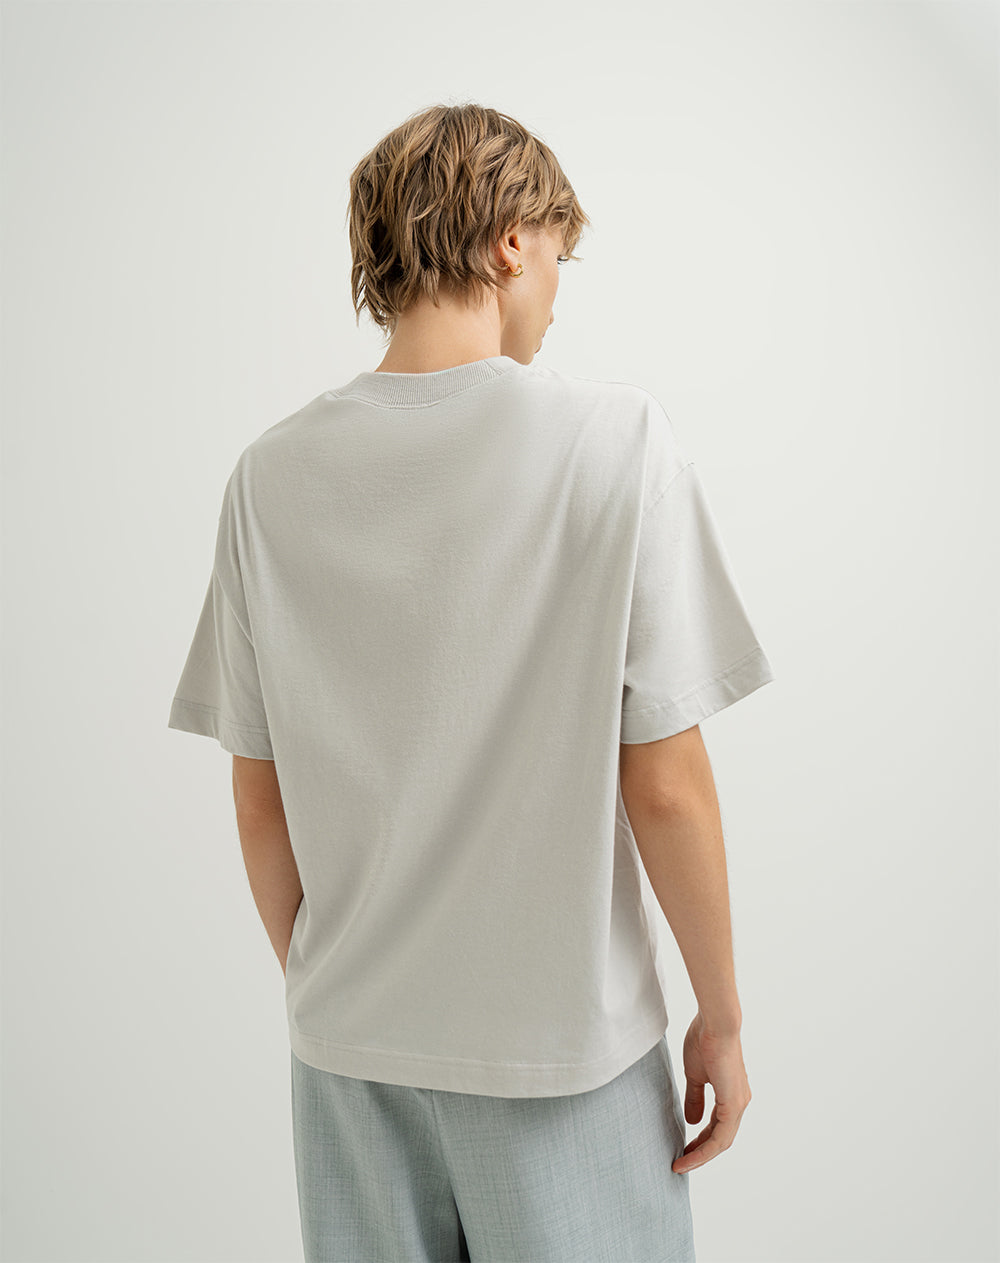 Camiseta  new triestina oversized fit manga corta gris claro